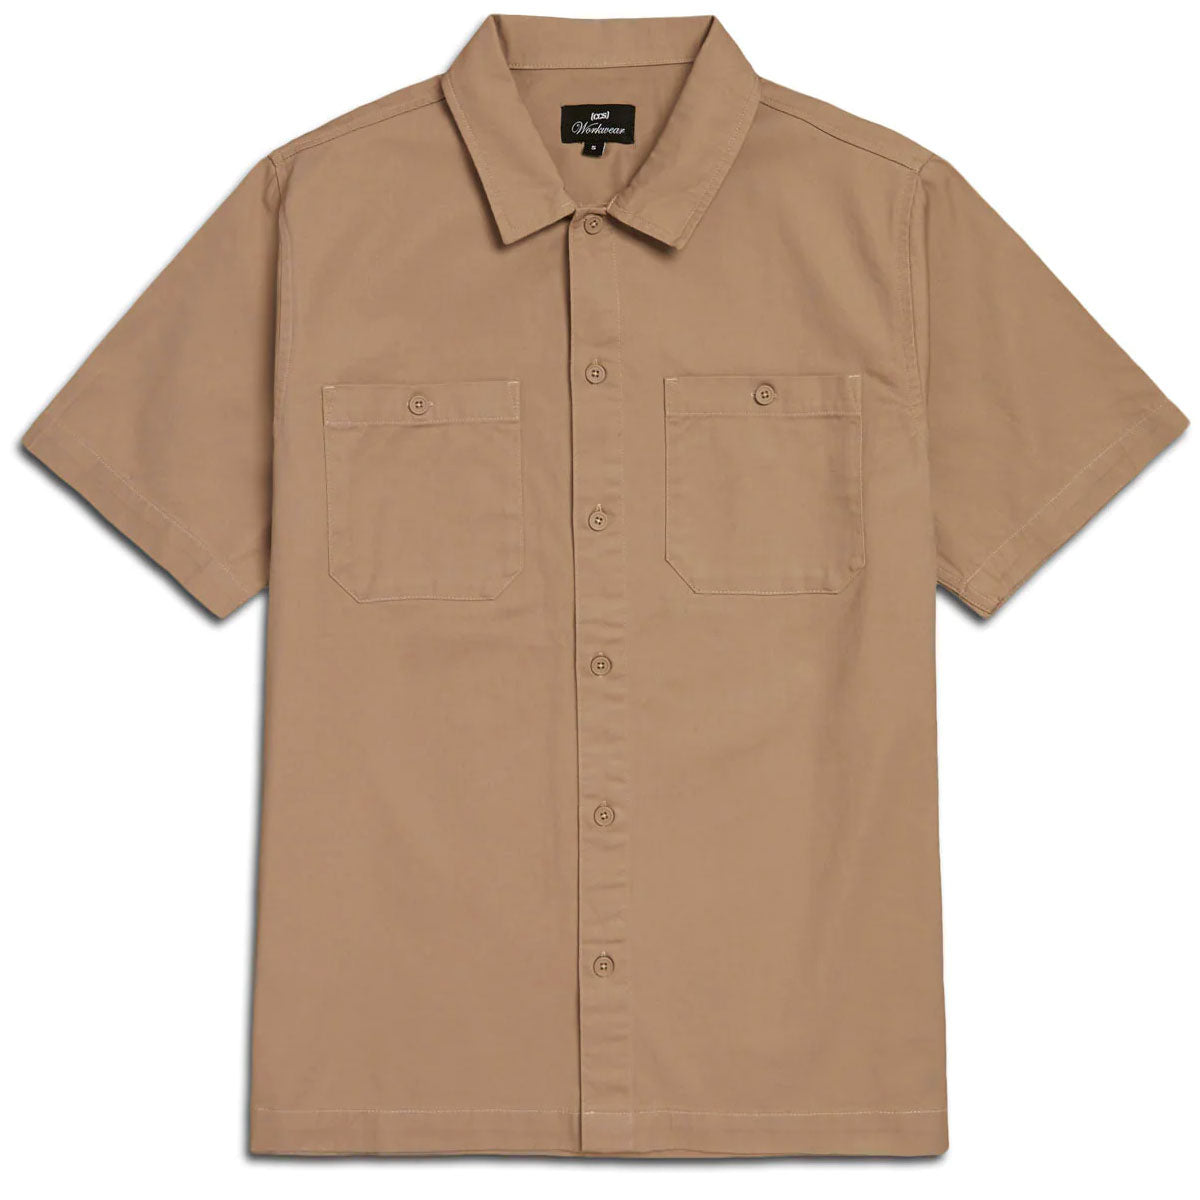 CCS Custom Embroidered Work Shirt - Khaki image 2